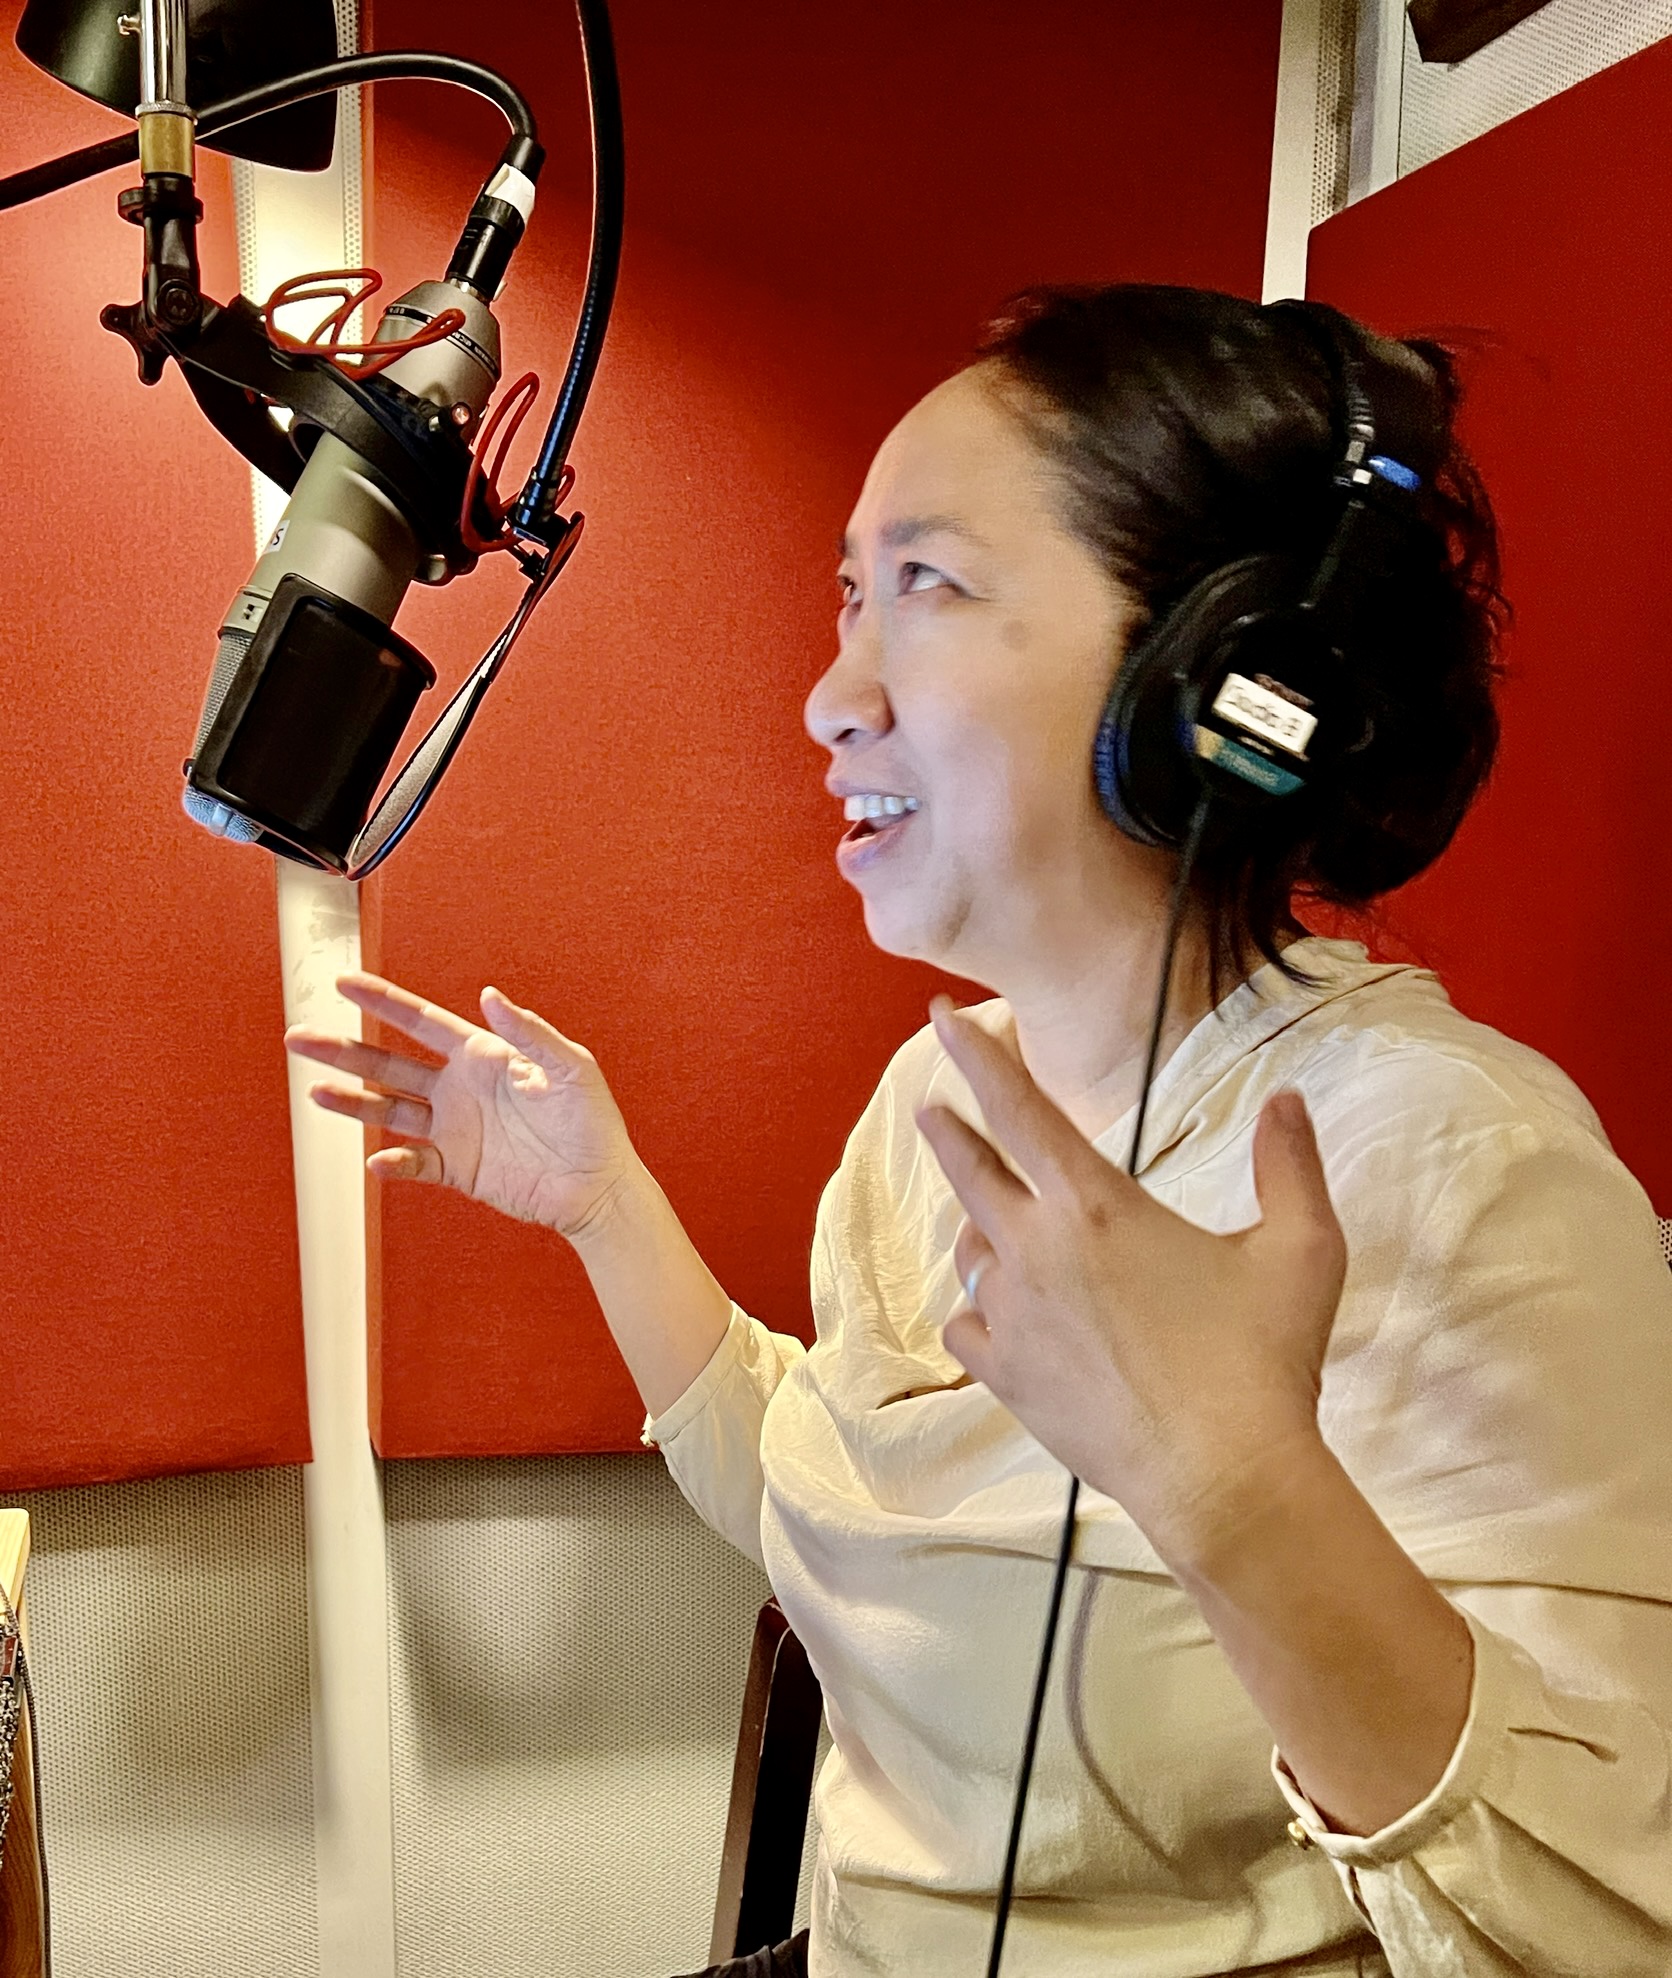 Author in studio, wearing headphones, speaks into a microphone